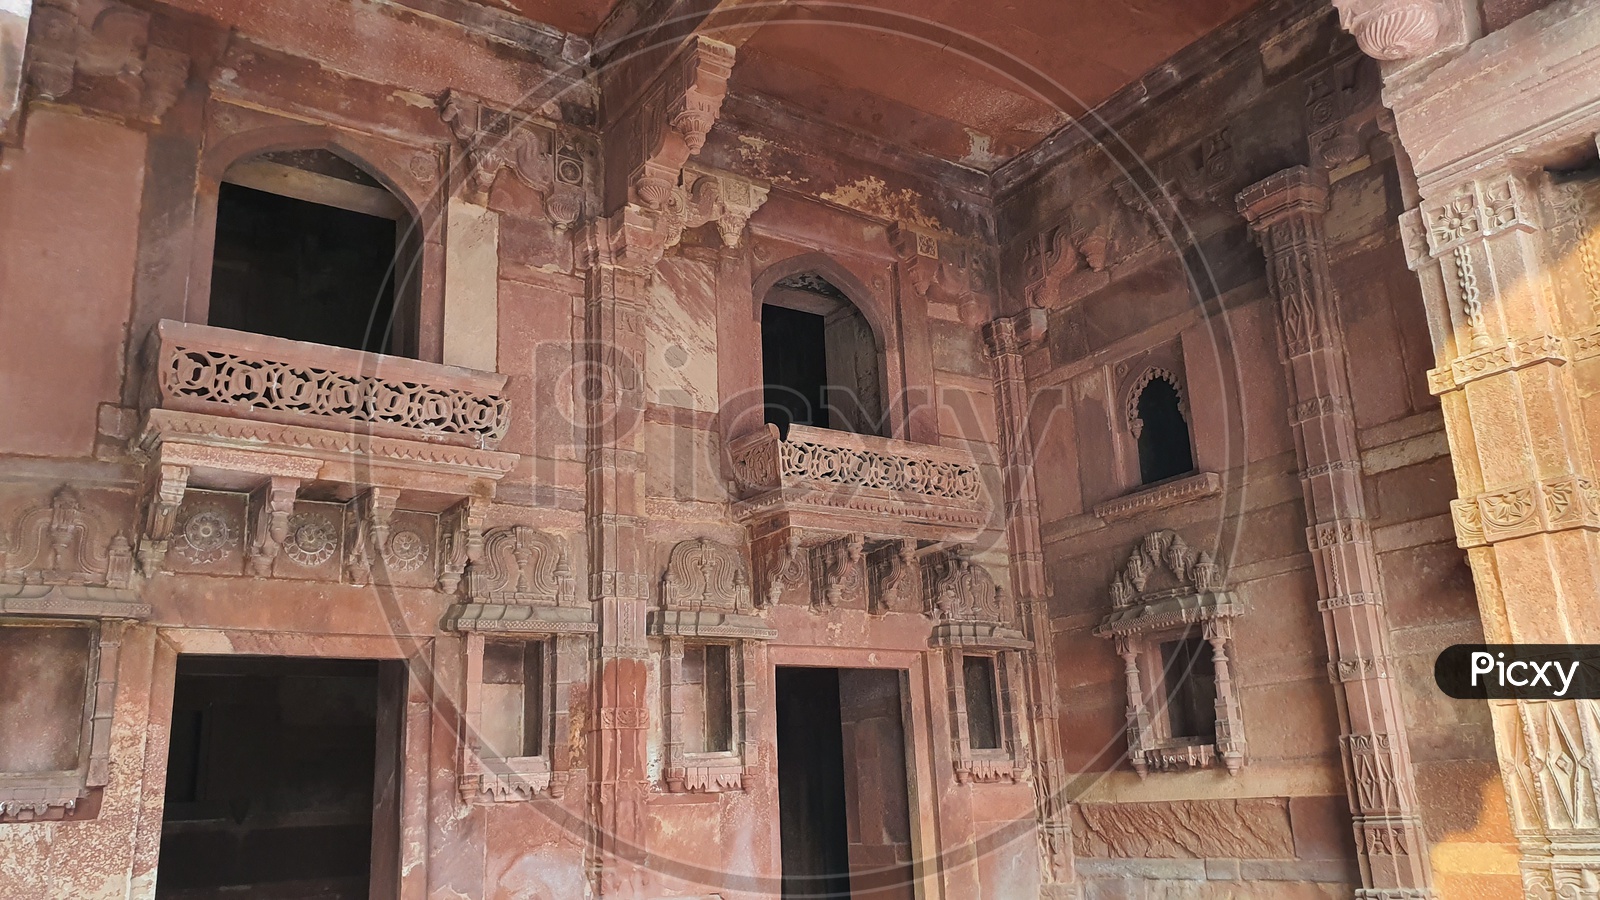 Fatepur sikri